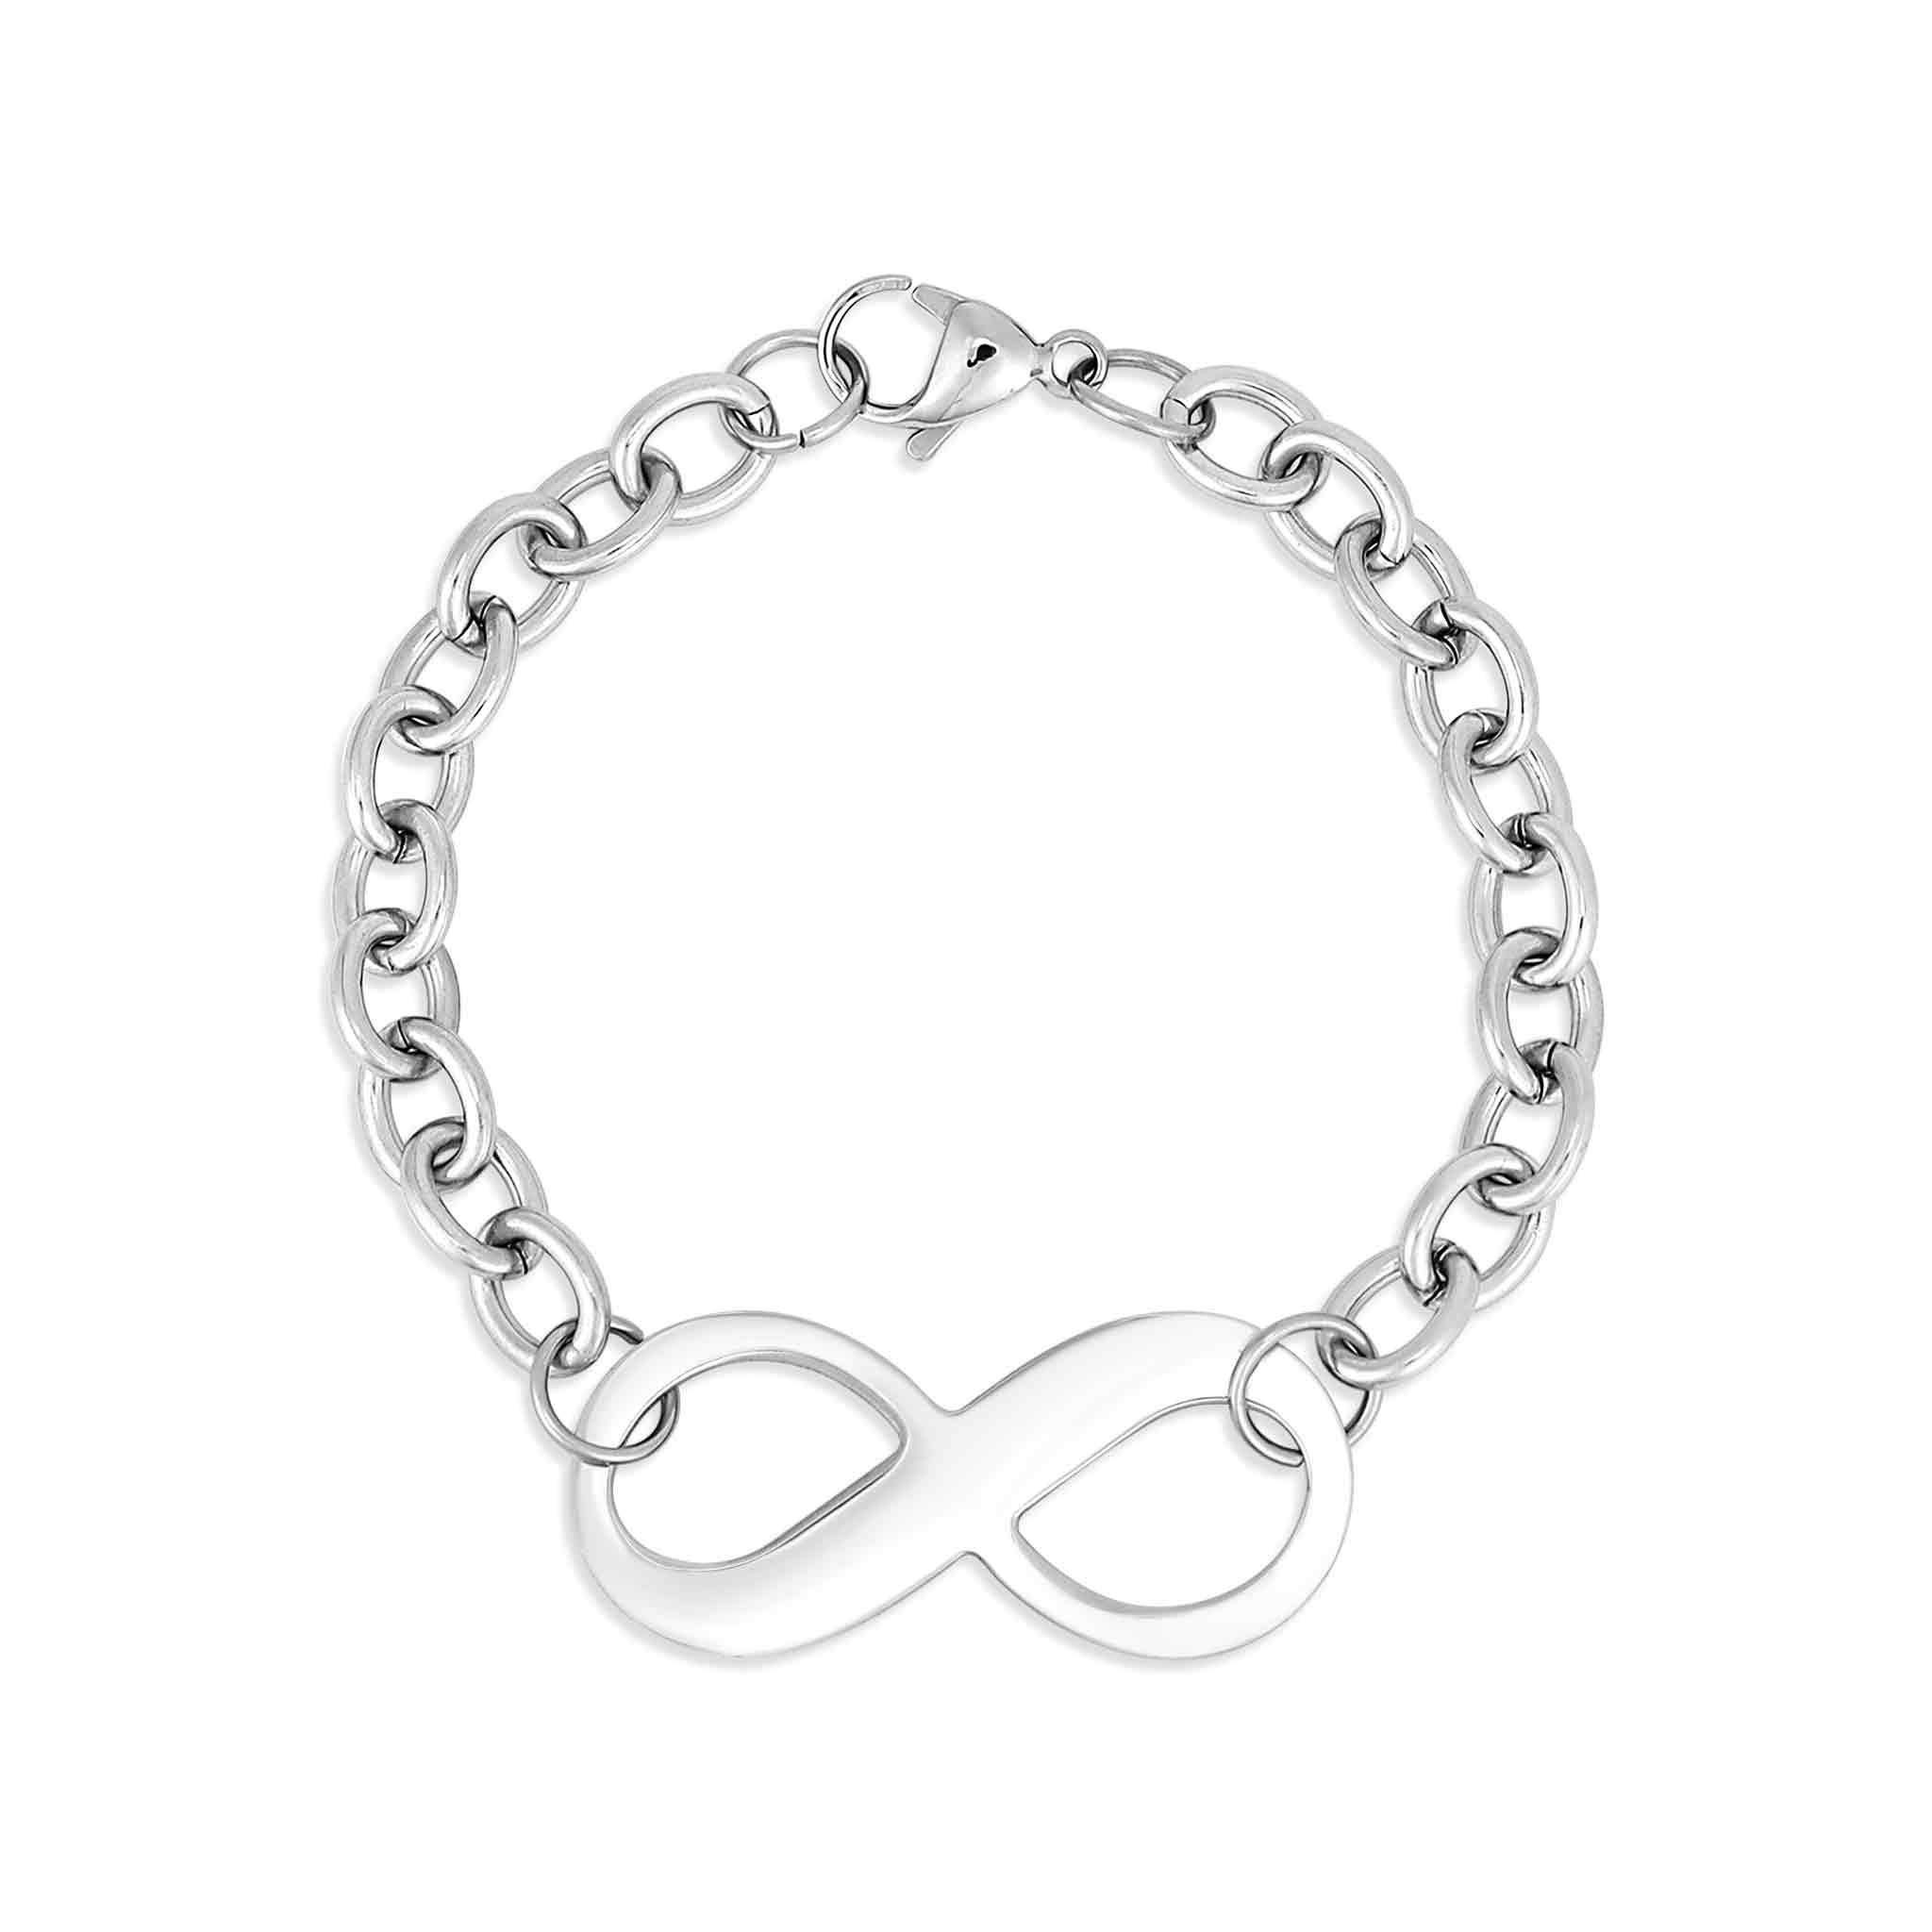 100 pcs wholesale infinity bracelet friendship charm | eBay